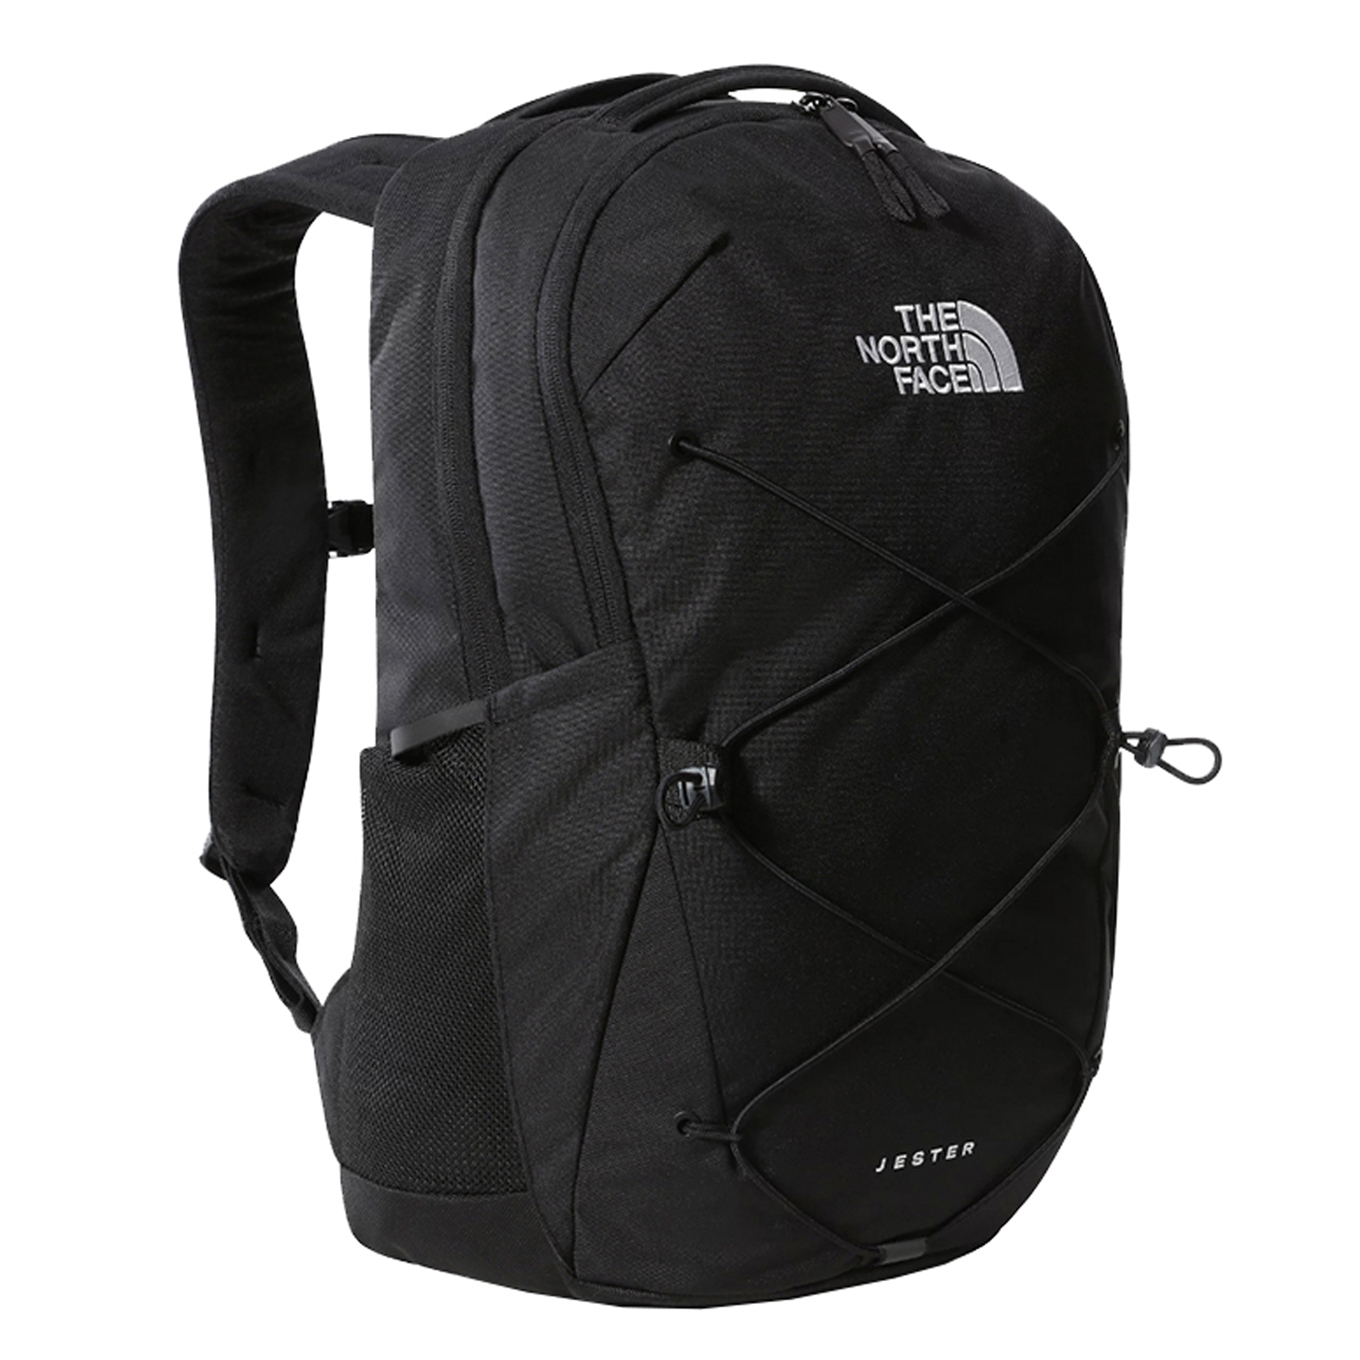 The North Face Jester Backpack black backpack